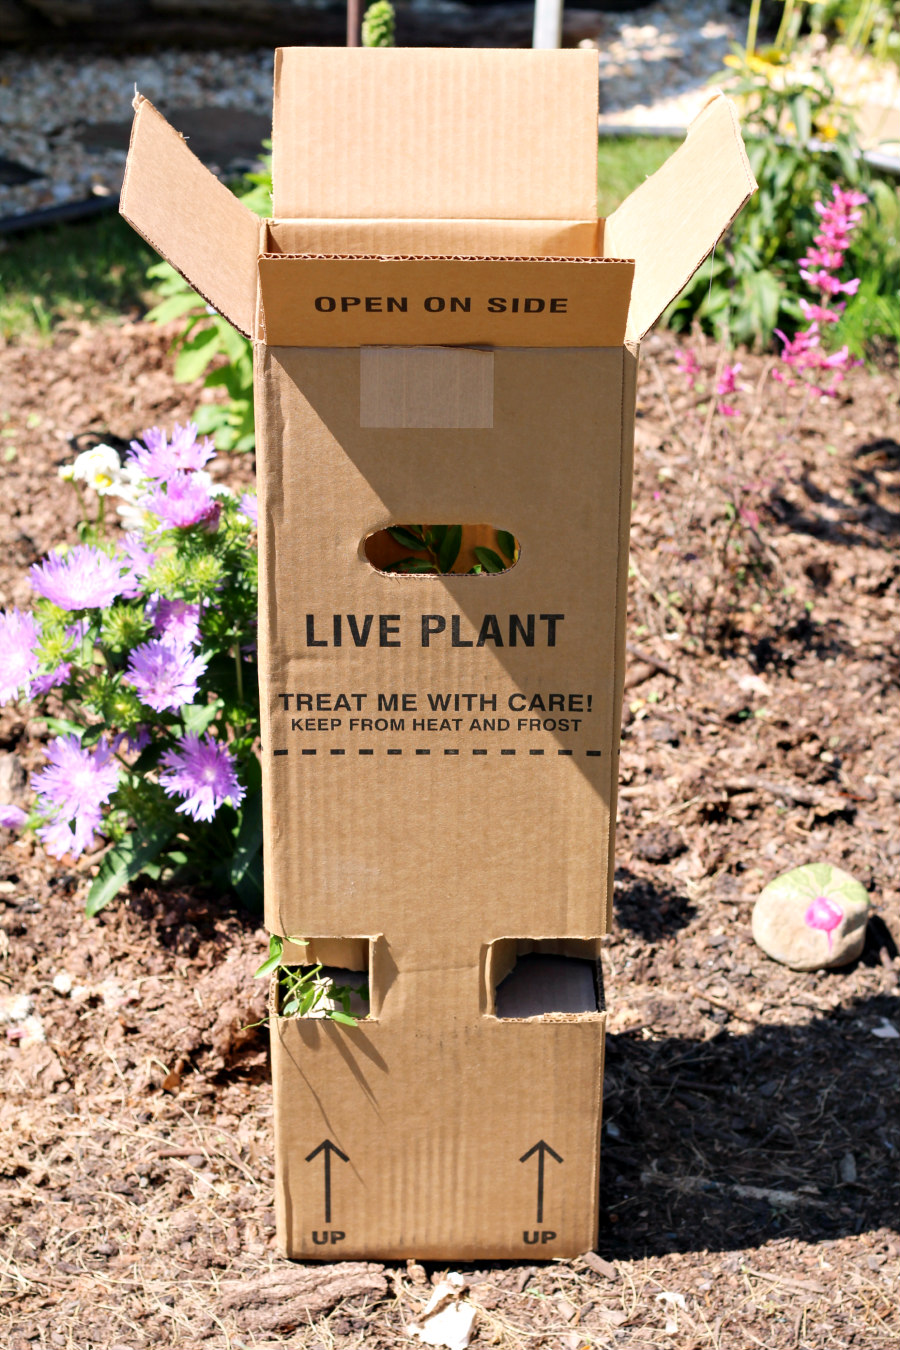 Lowbush blueberry plant in live plant shipping box.